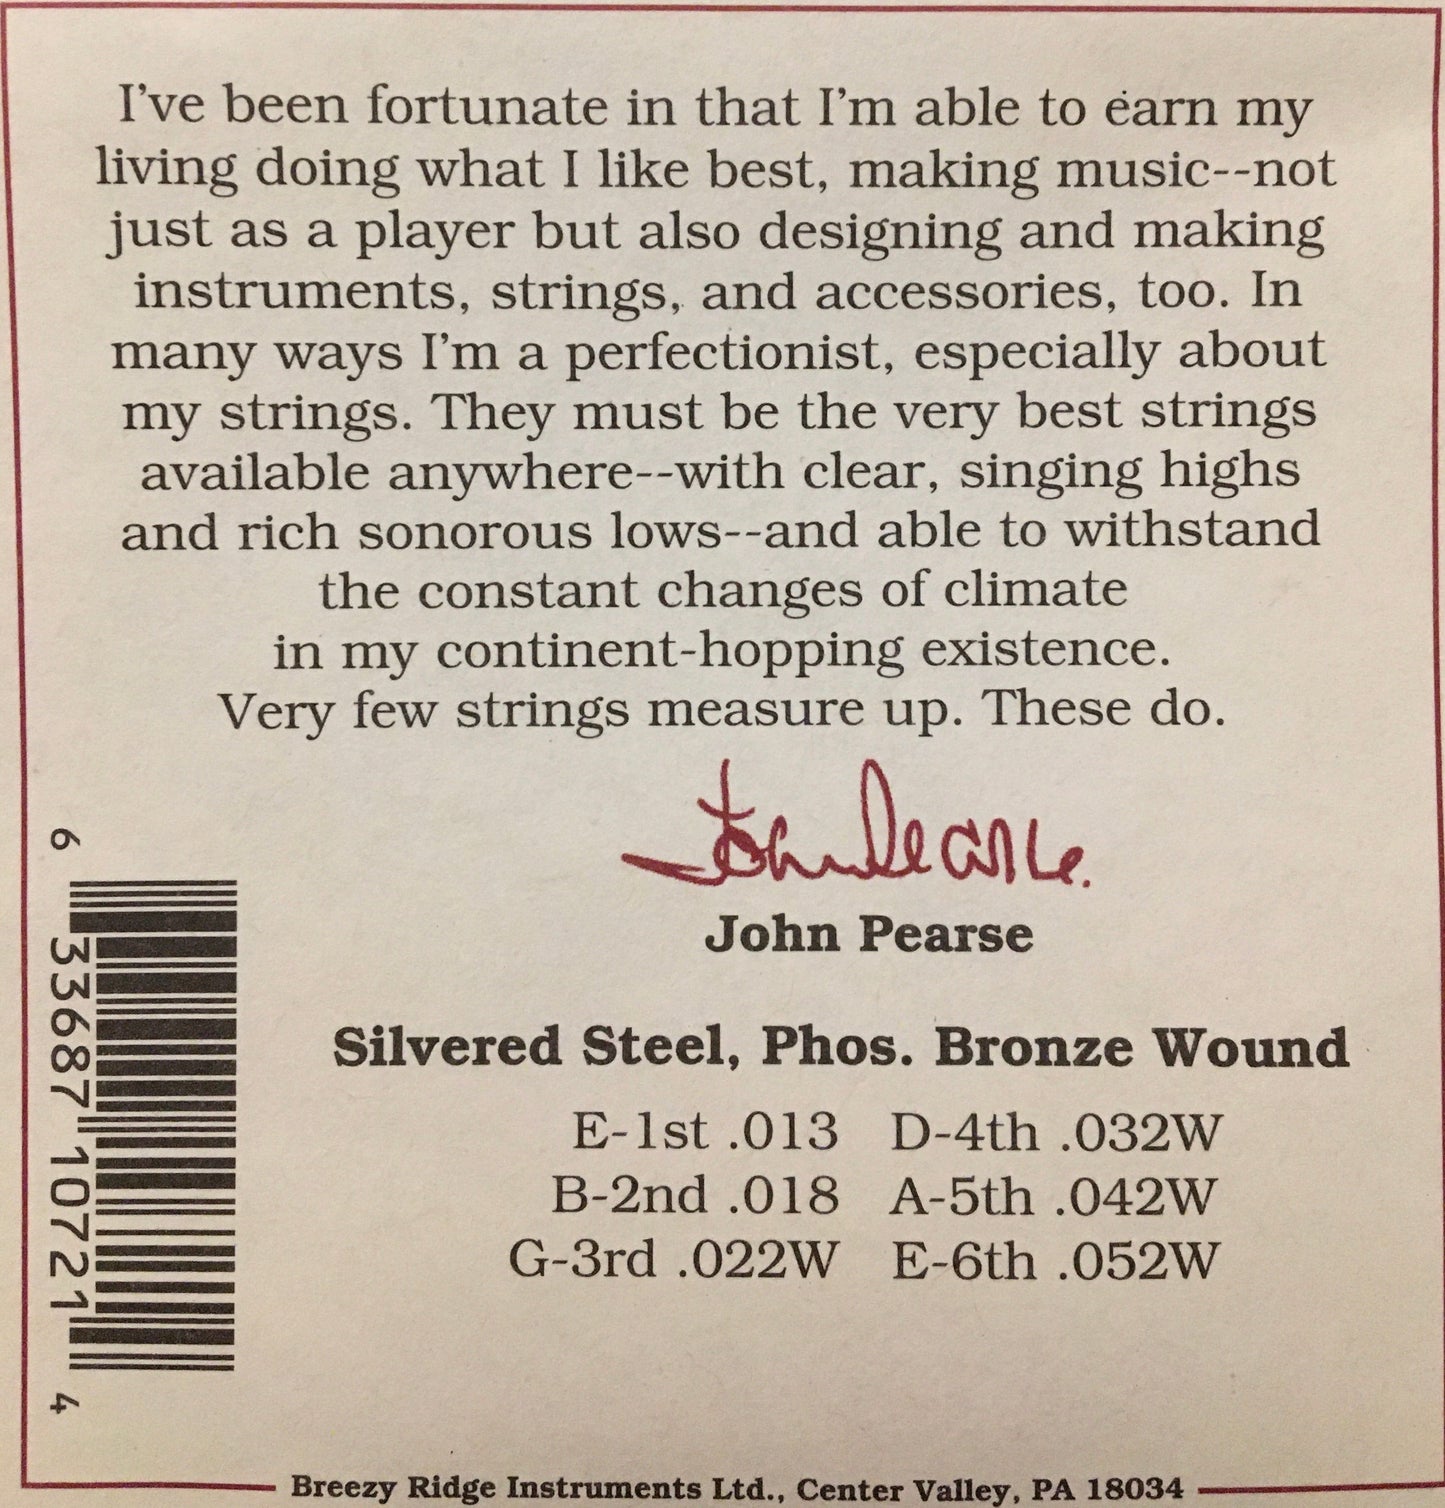 John Pearse 720ML Phosphor Bronze Wound Acoustic Guitar String Set, Medium Light Strings, Bows & More